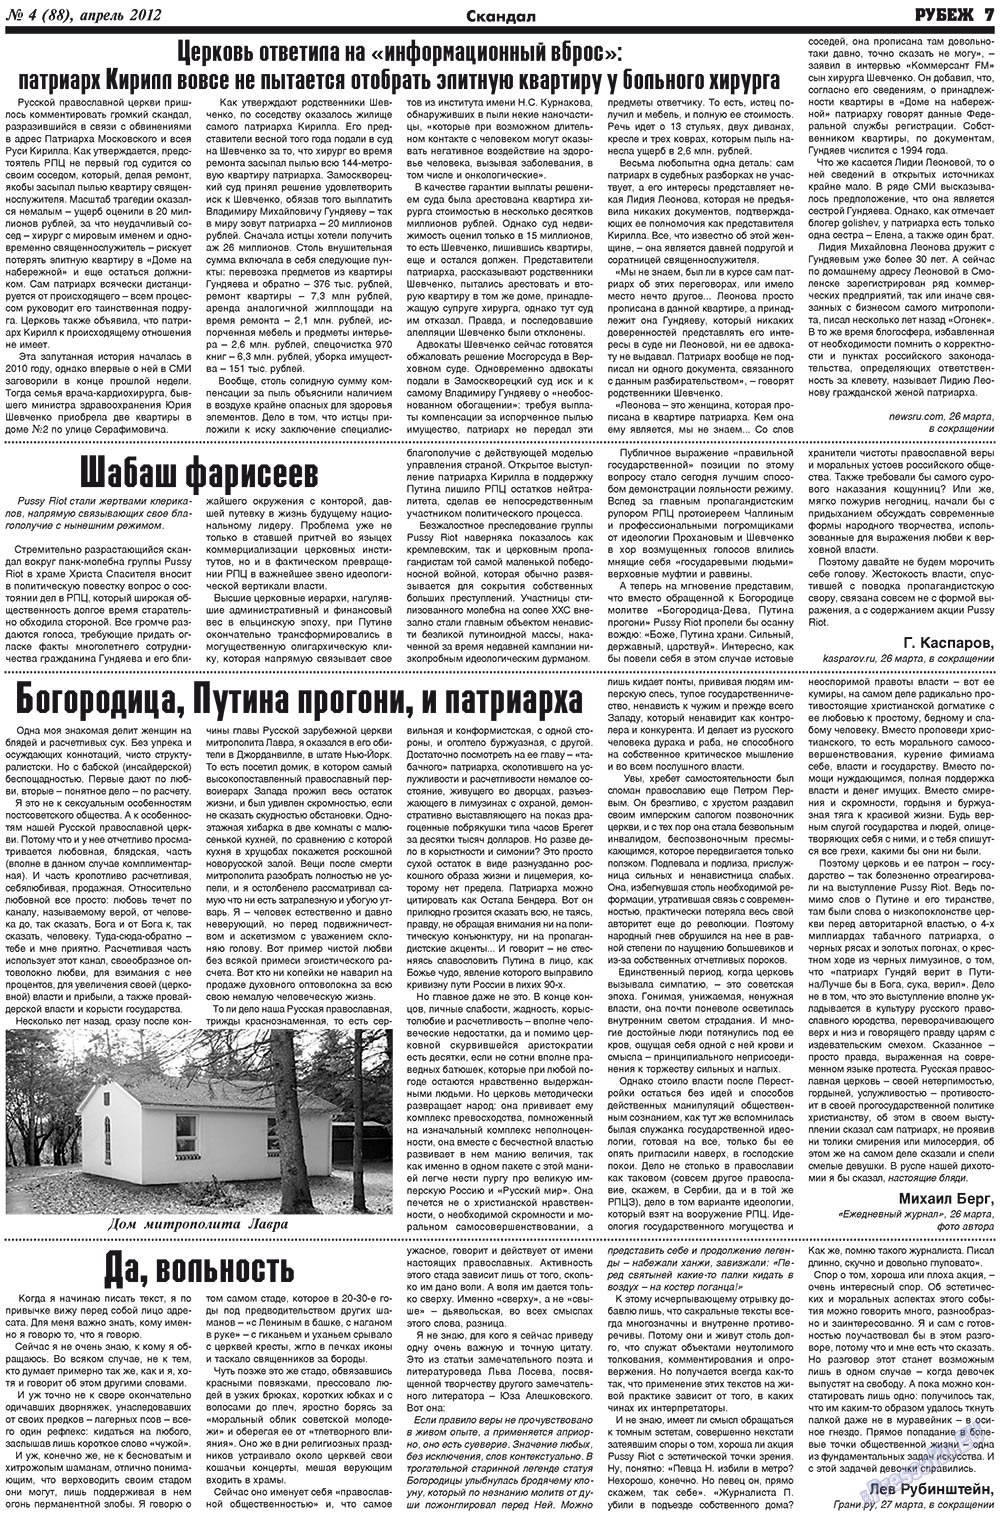 Рубеж, газета. 2012 №4 стр.7